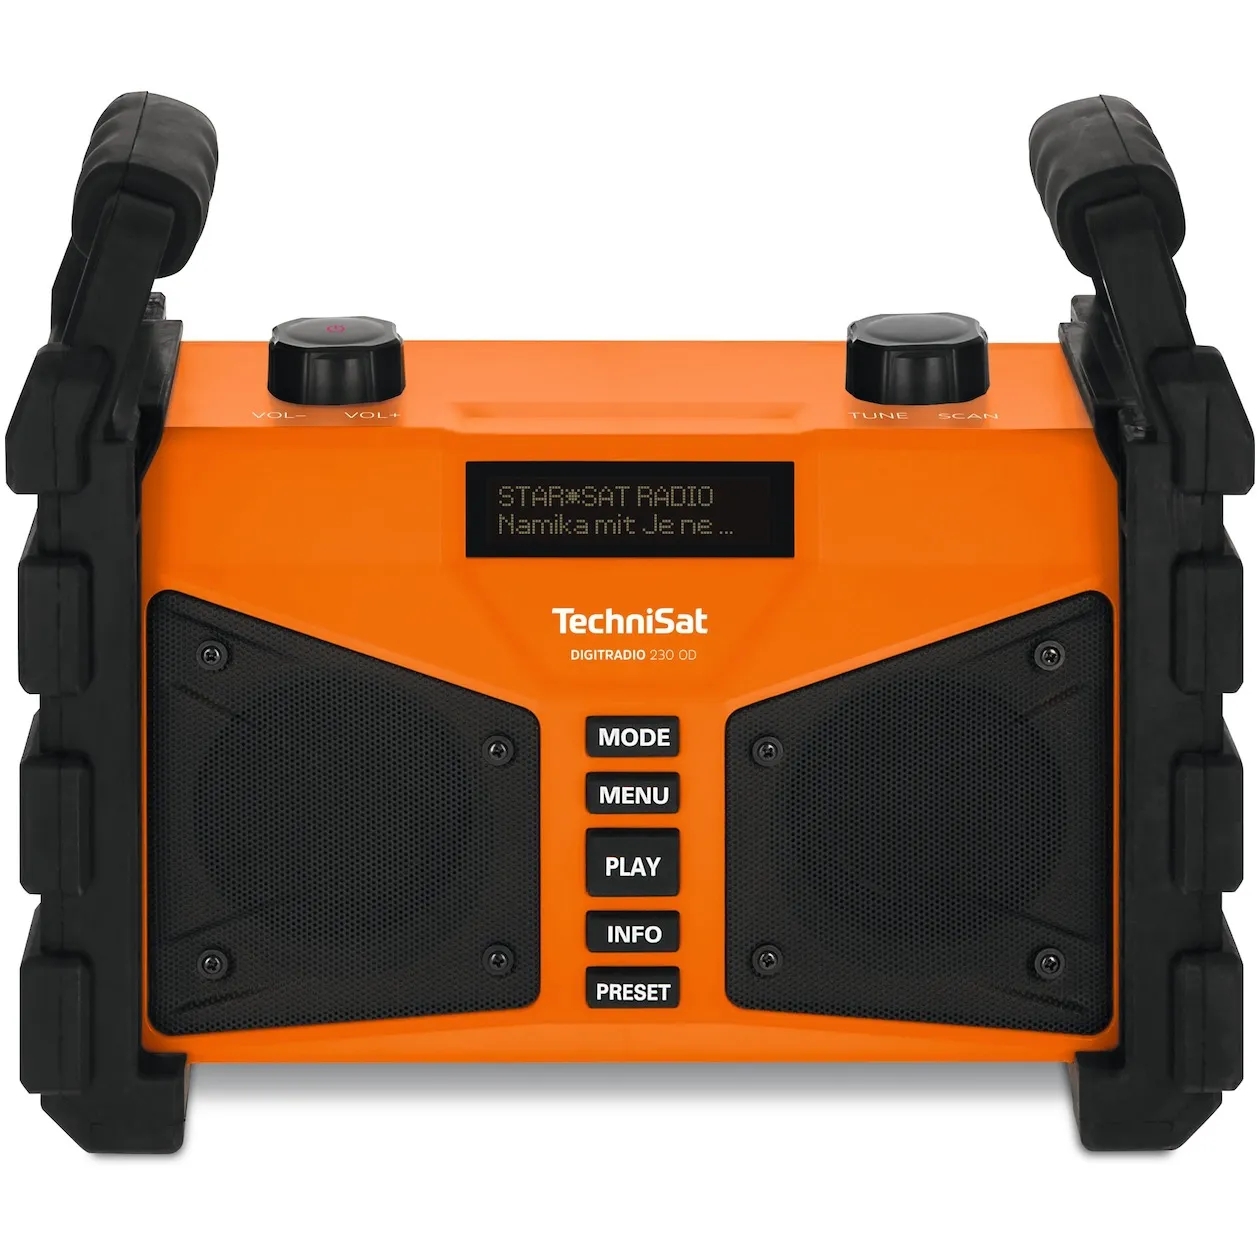 TechniSat DigitRadio 230 Oranje